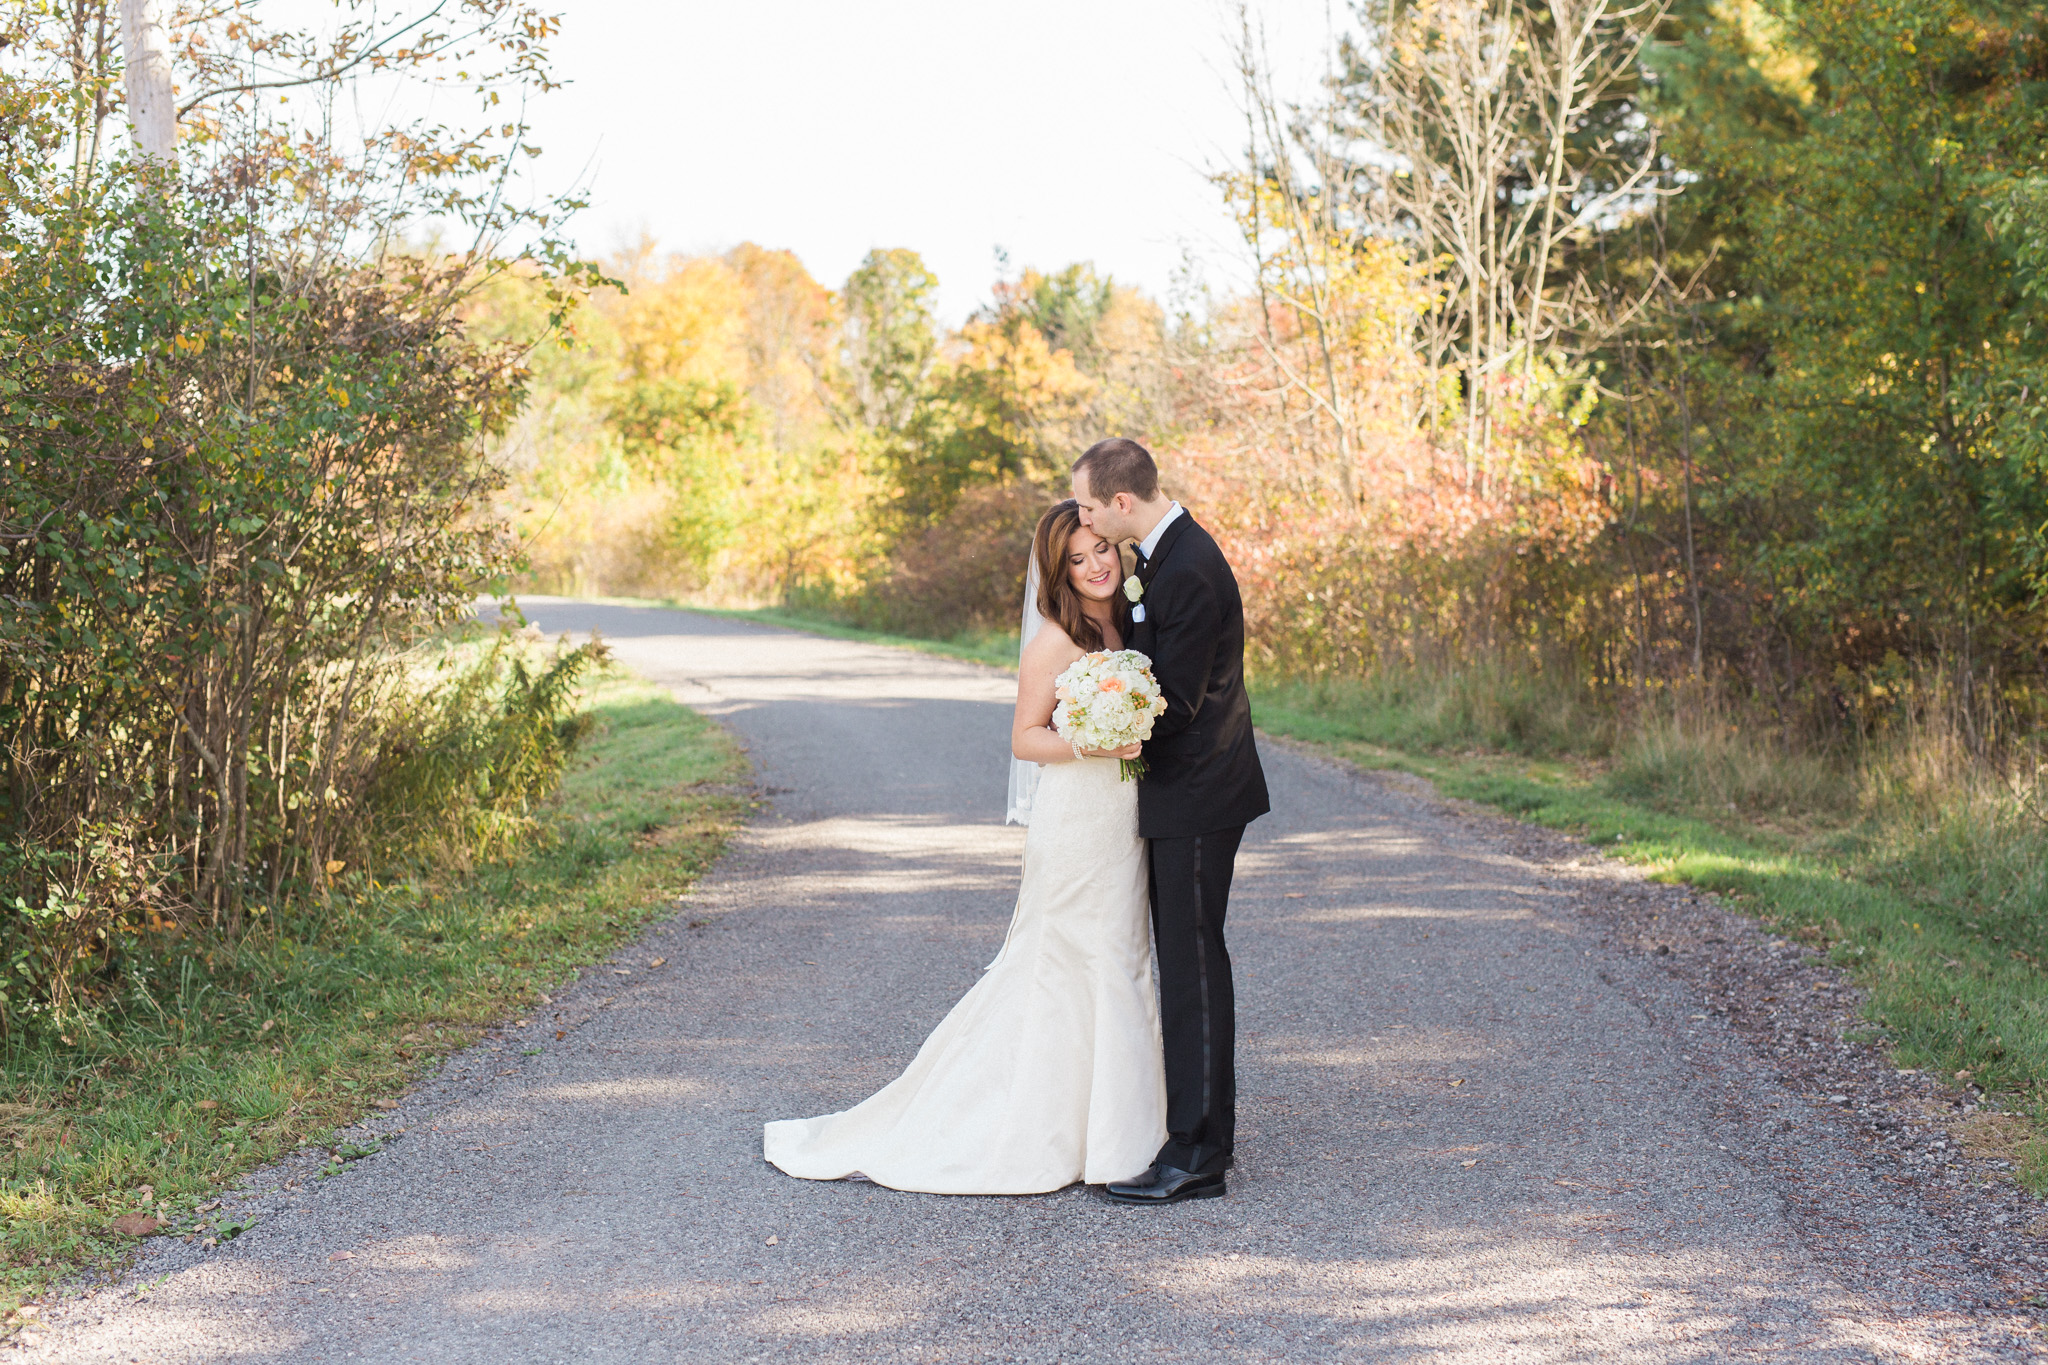 BEE MINE PHOTOGRAPHY // Canton, Ohio Photographer // Akron Ohio Wedding, Akron Hilton Wedding, Hotel Wedding, Fall Wedding, Gold Cranberry and Peach Wedding